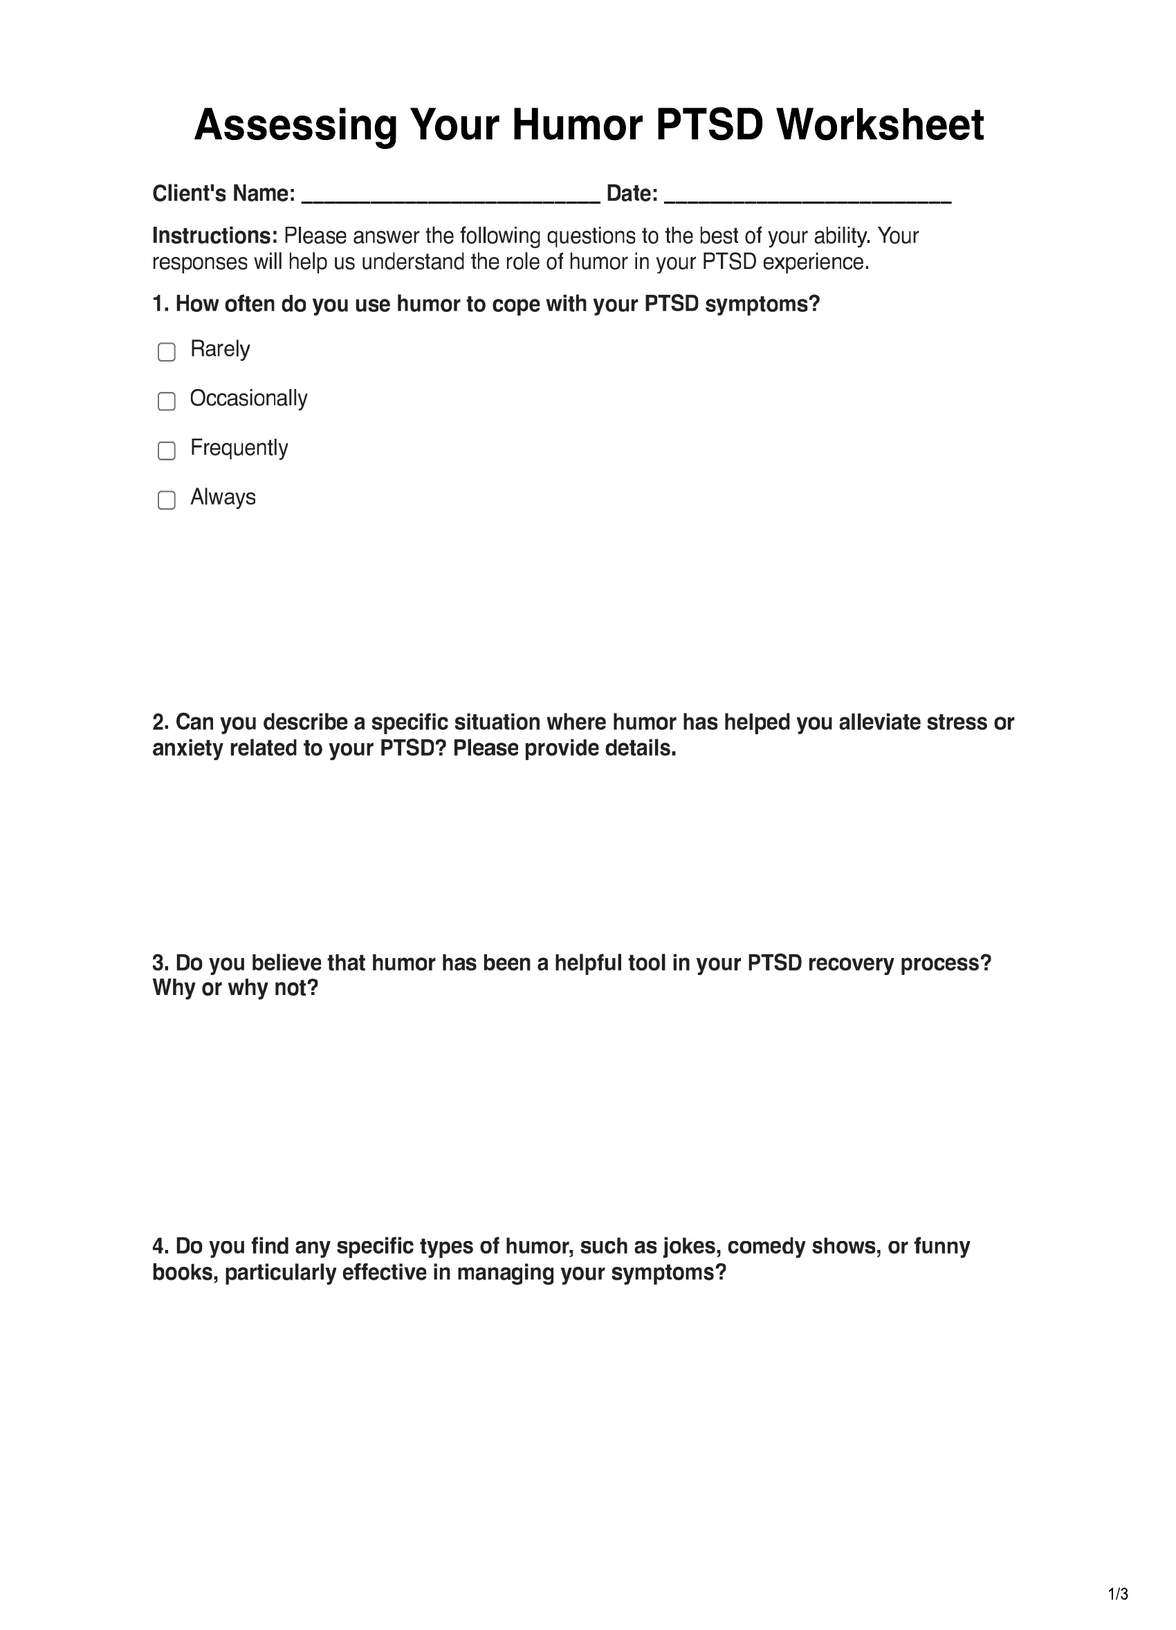 Assessing Your Humor PTSD Worksheet PDF Example